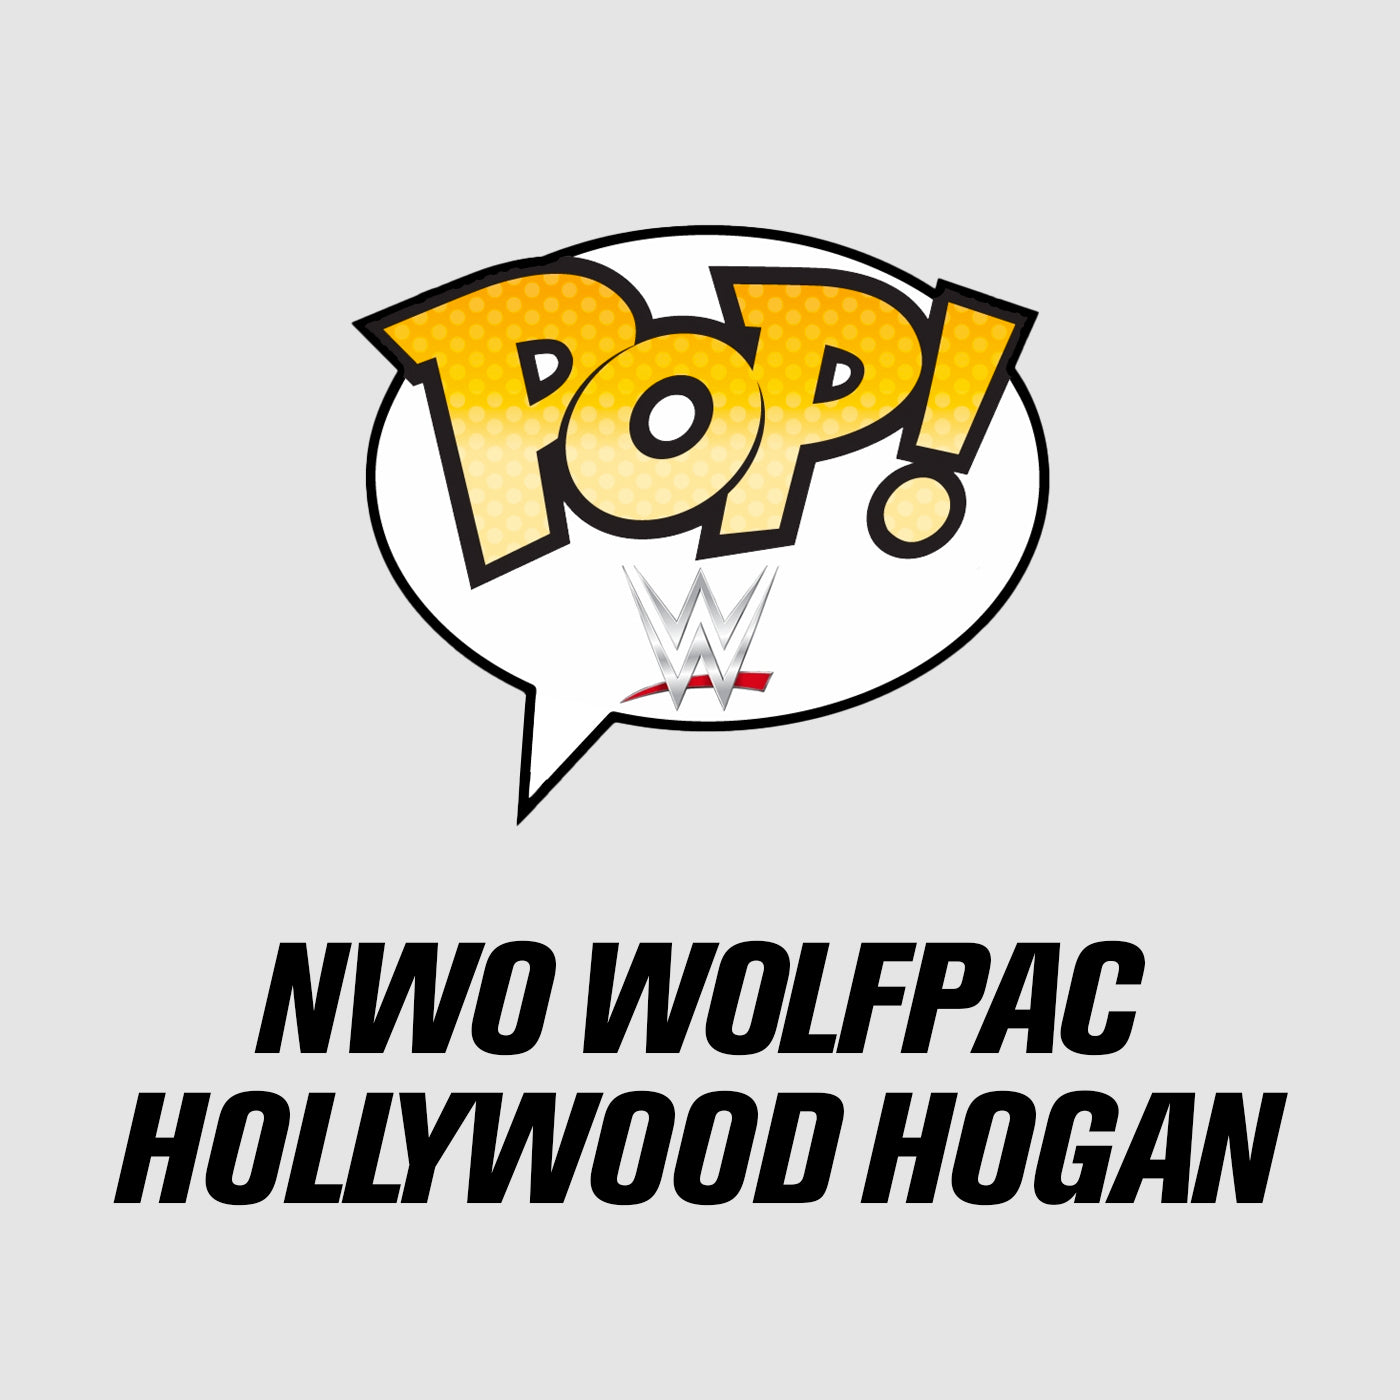 WWE Funko Pop nWo Wolfpac Hollywood Hogan figure available at slamazon.ca